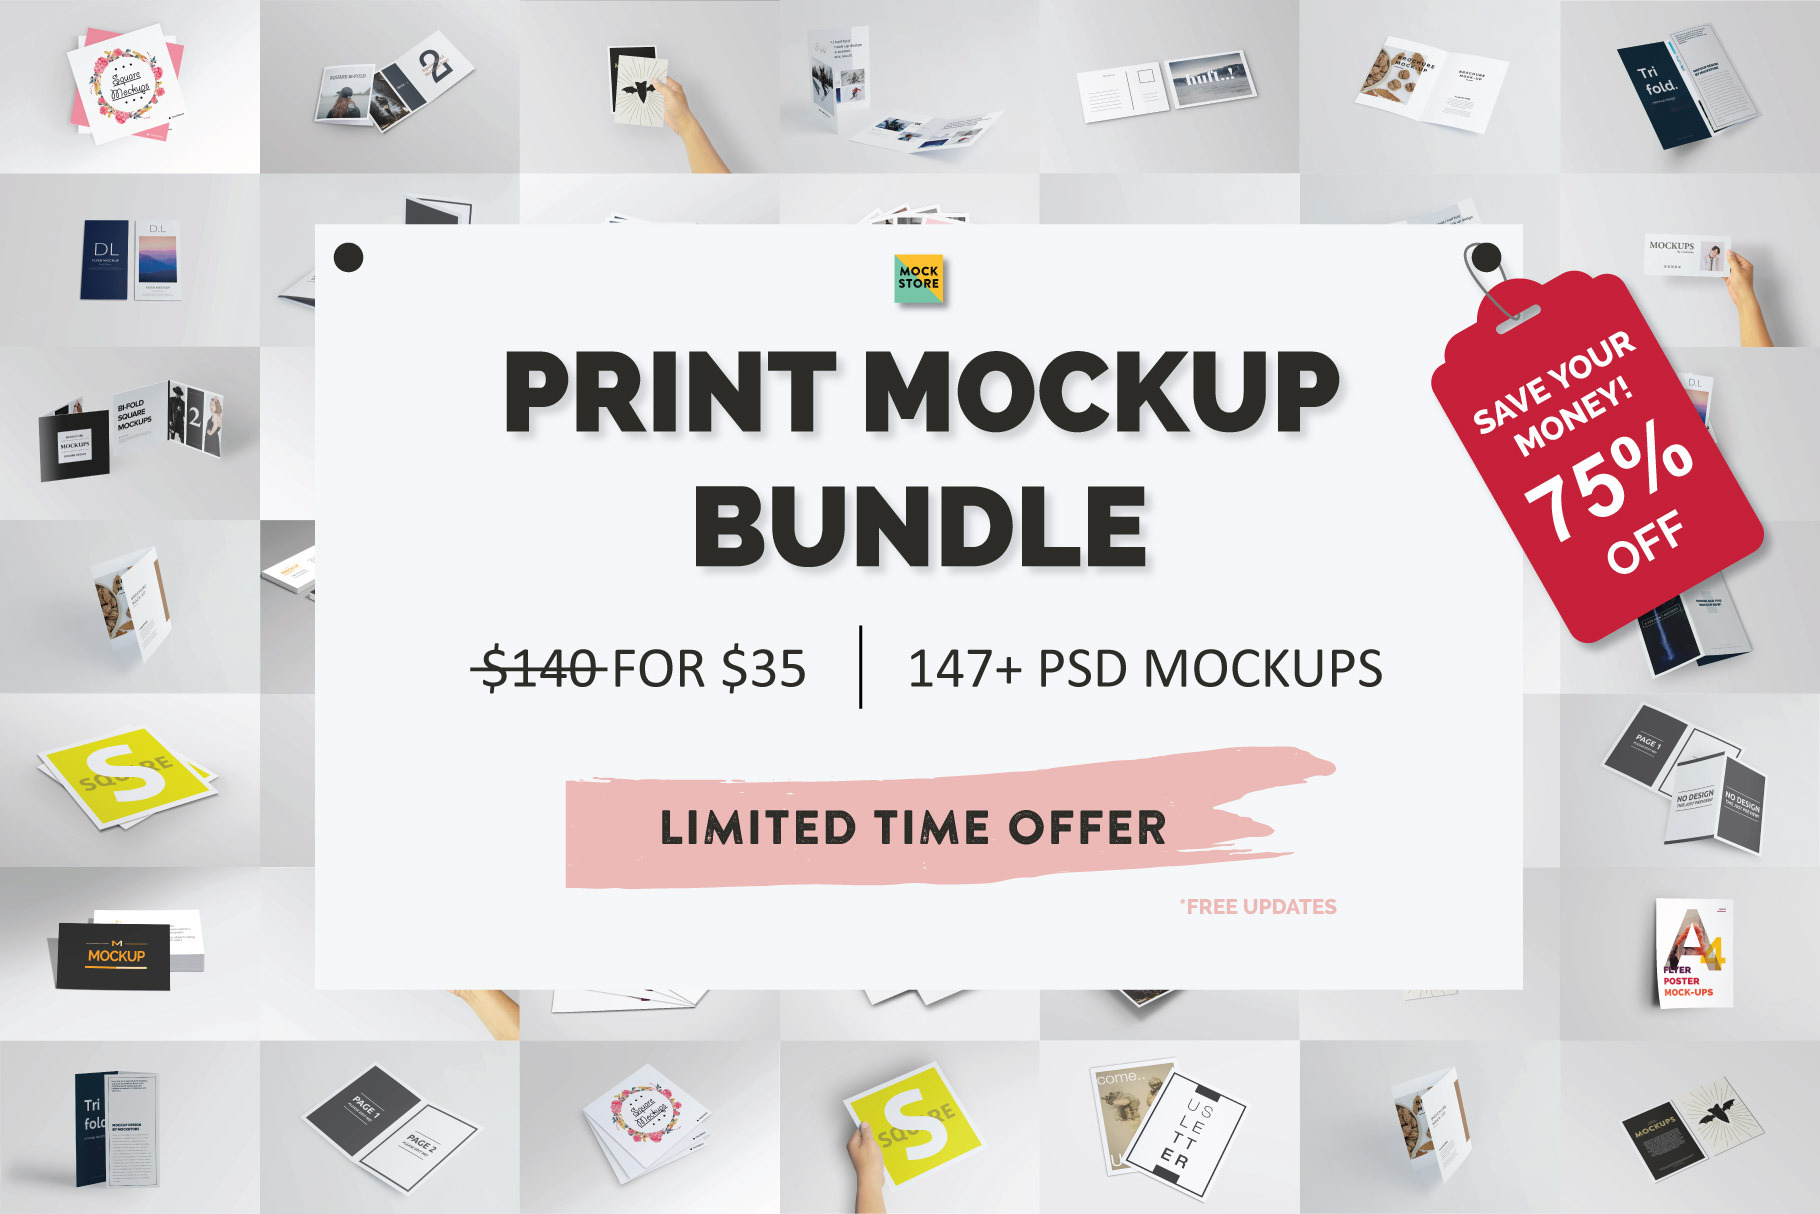 Print Mockup Bundle | Save 75% Off